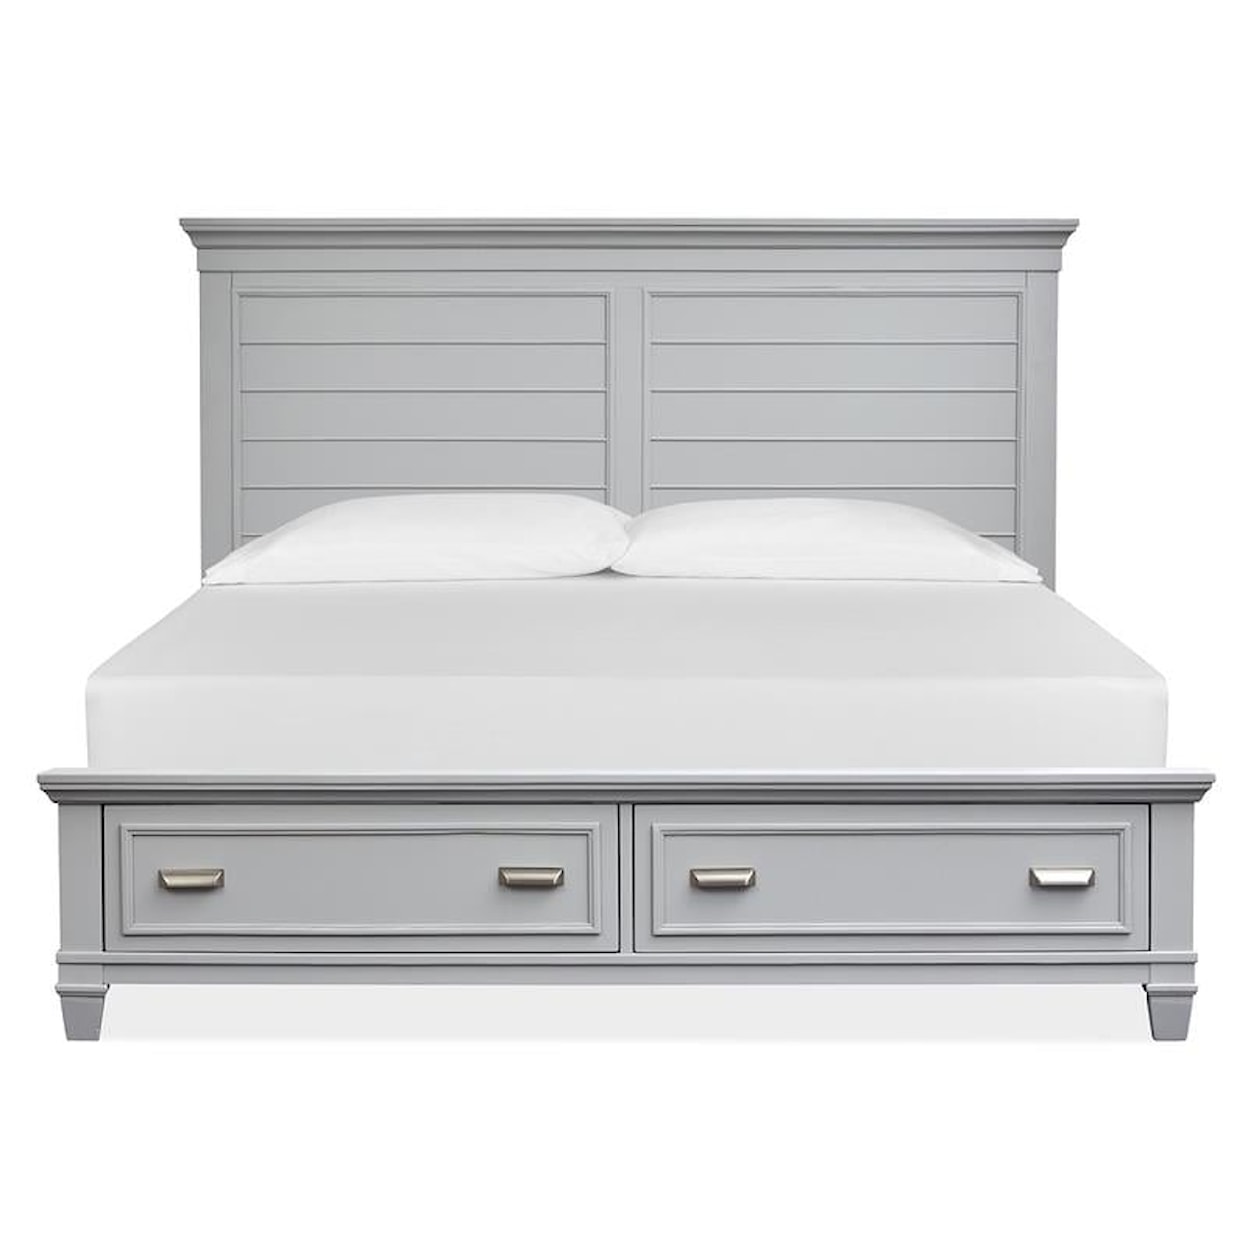 Magnussen Home Charleston Bedroom Complete King Panel Storage Bed